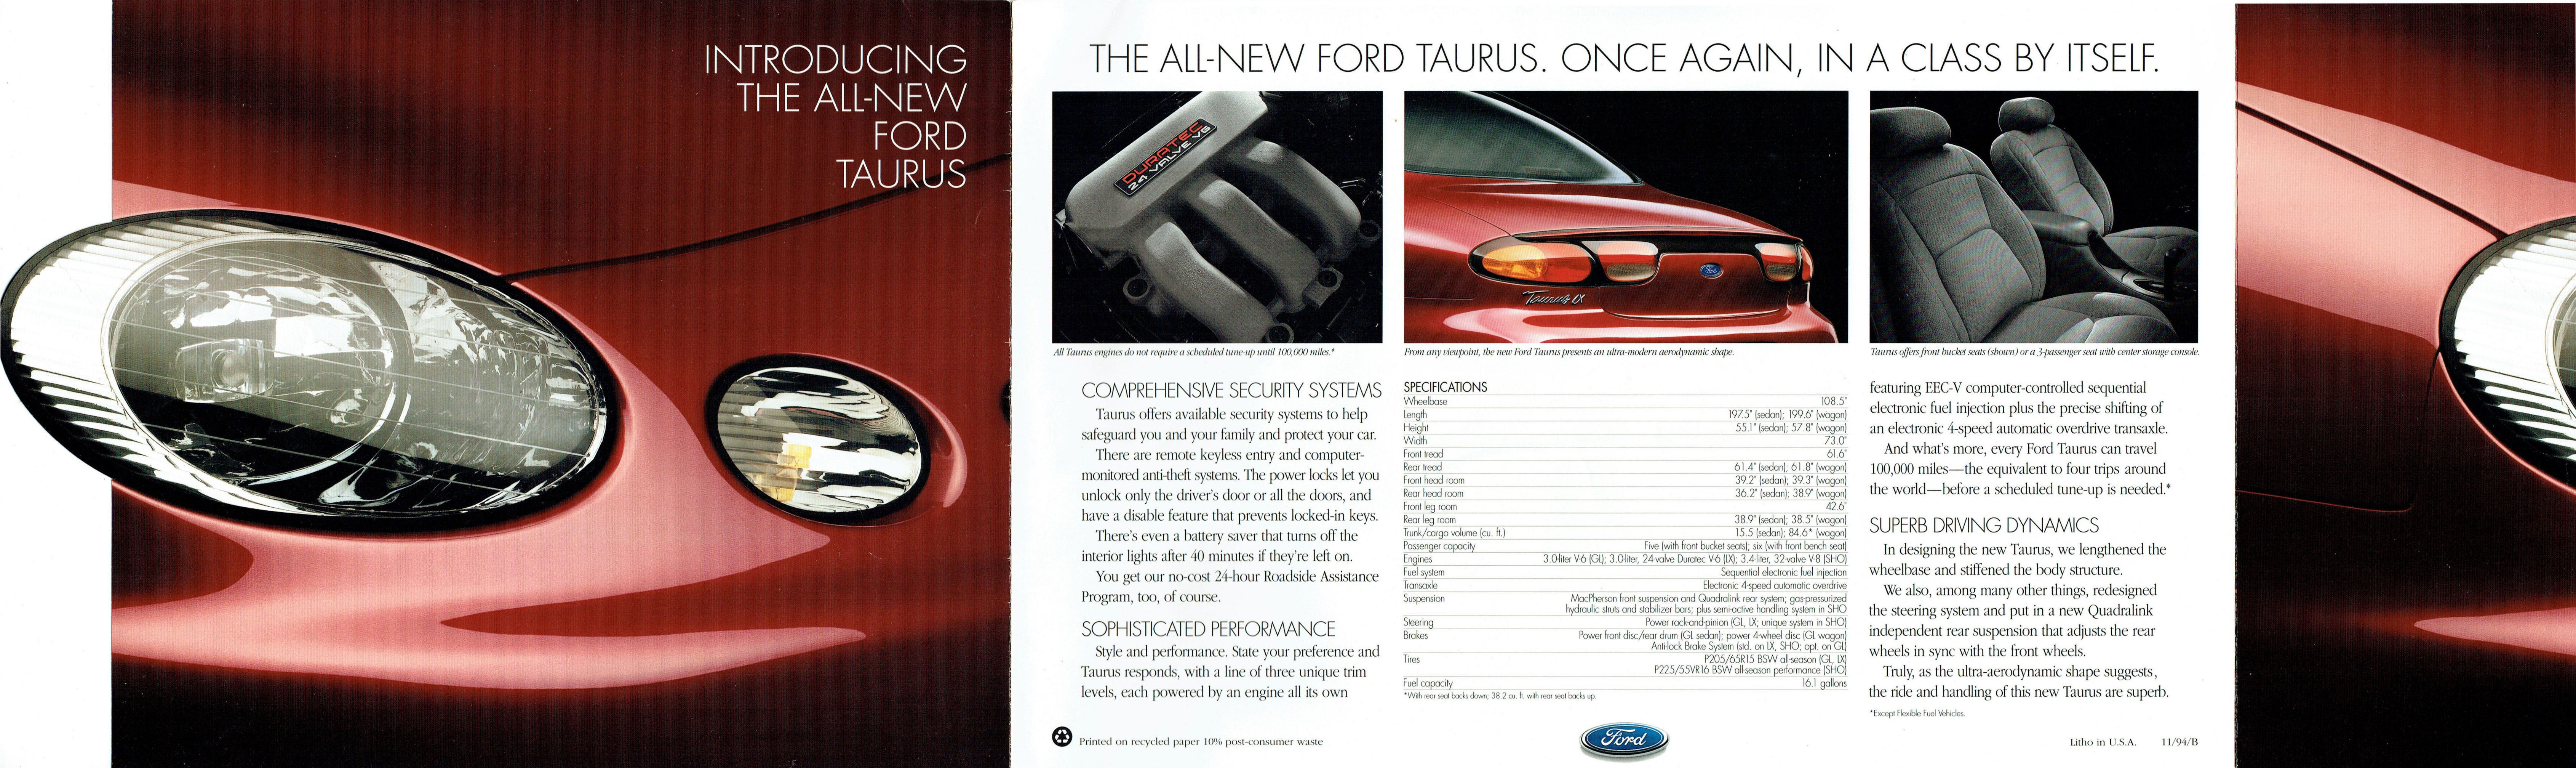 1996_Ford_Taurus_Intro-04-01